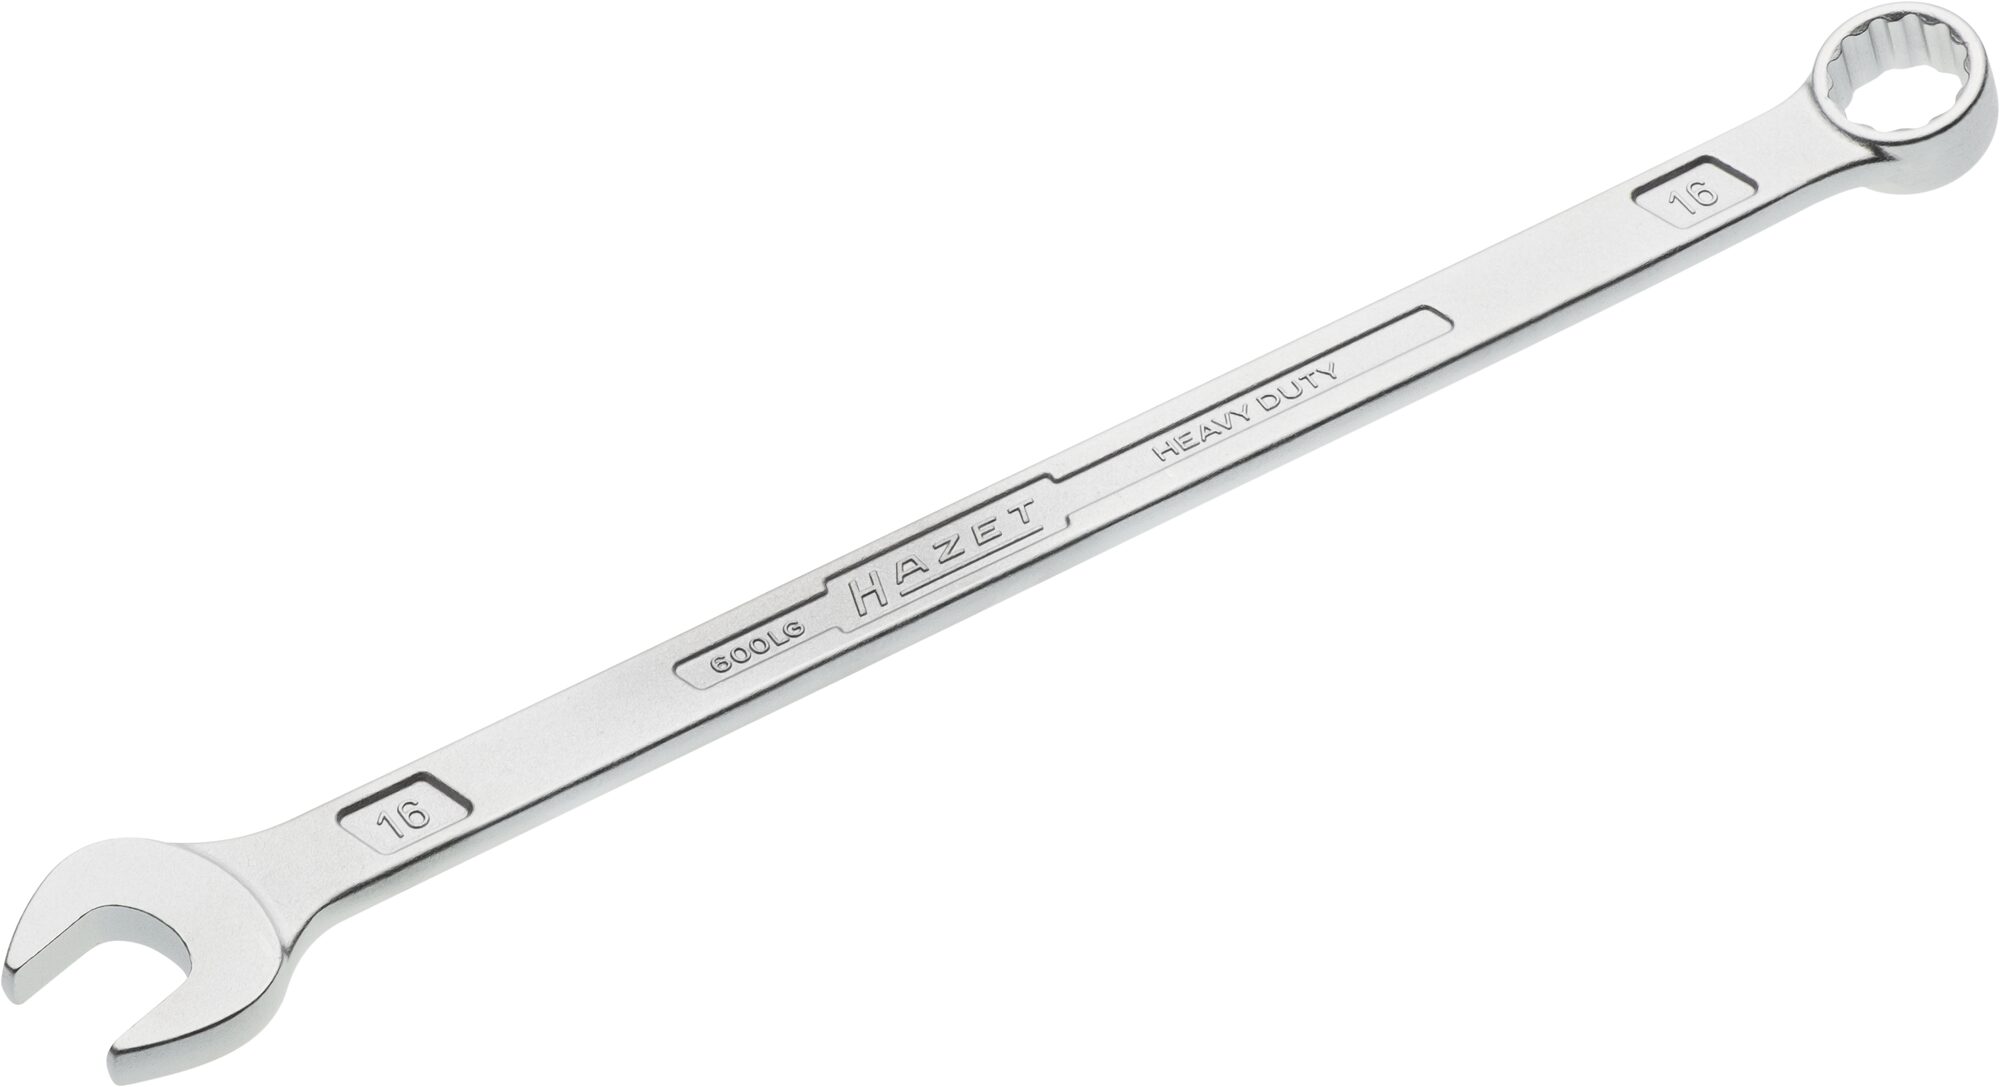 HAZET Ring-Maulschlüssel · extra lang · schlanke Bauform 600LG-16 · Außen Doppel-Sechskant-Tractionsprofil · 16 mm